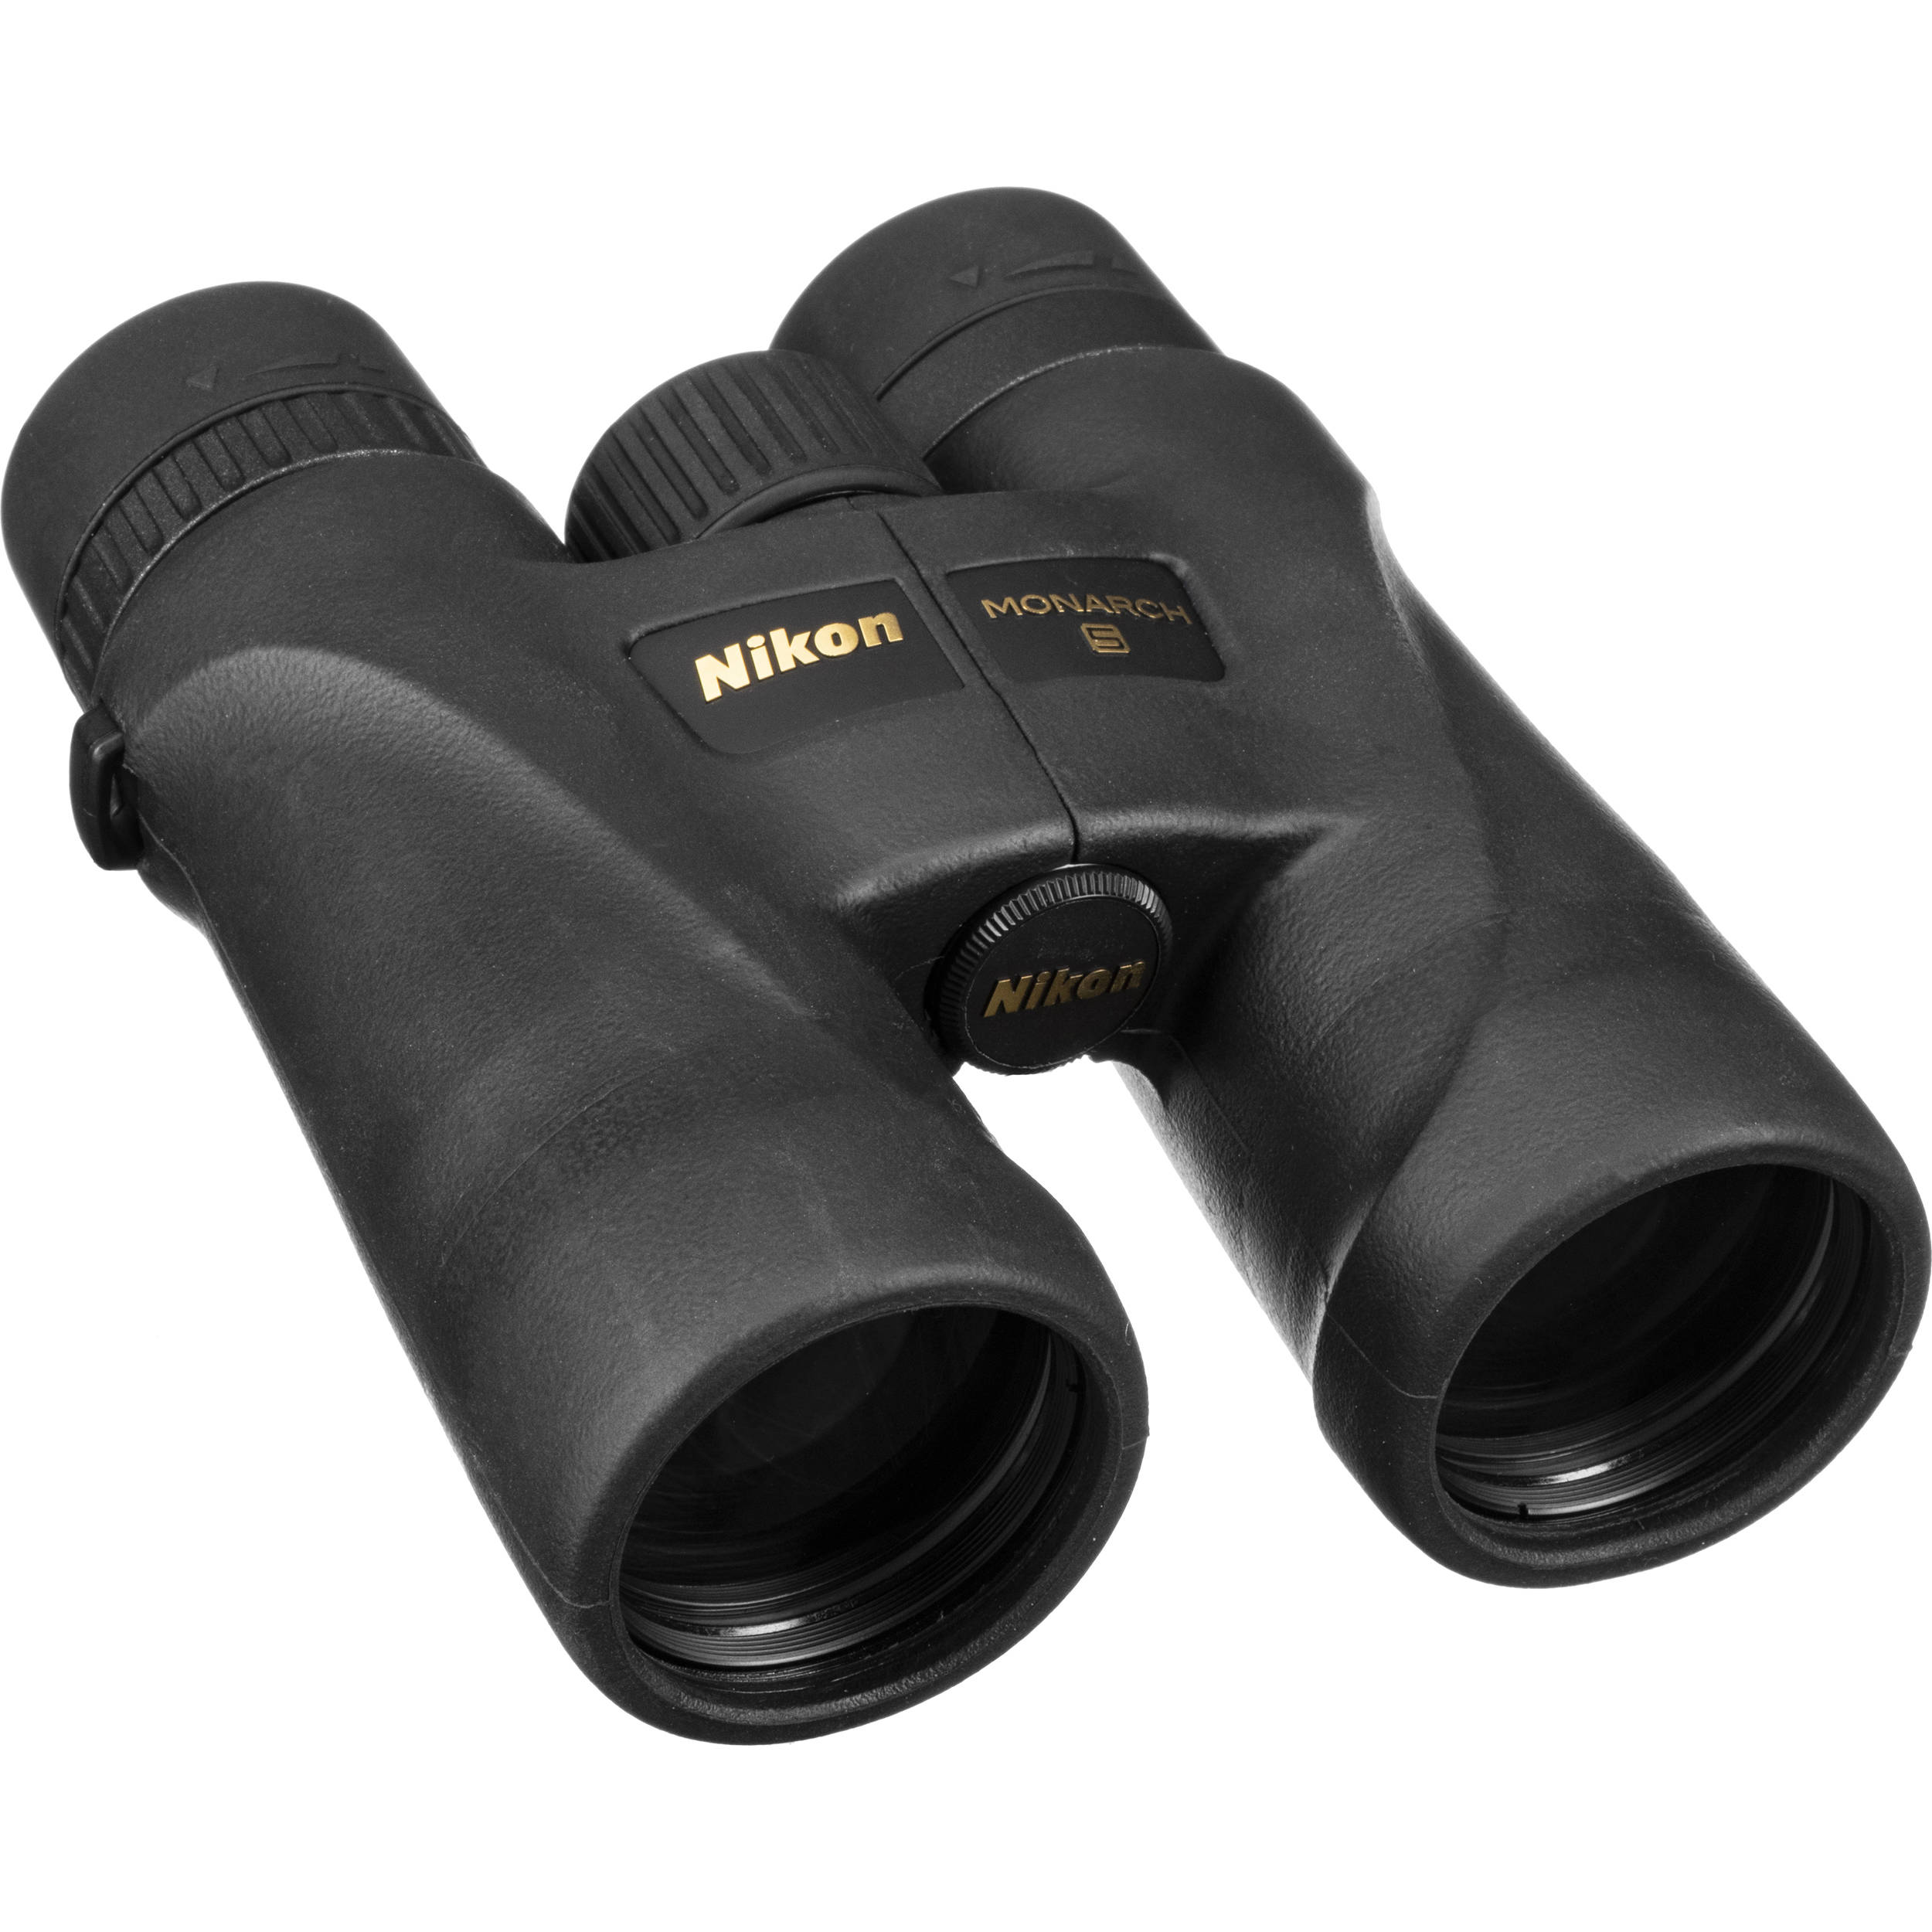 monarch 3 binoculars